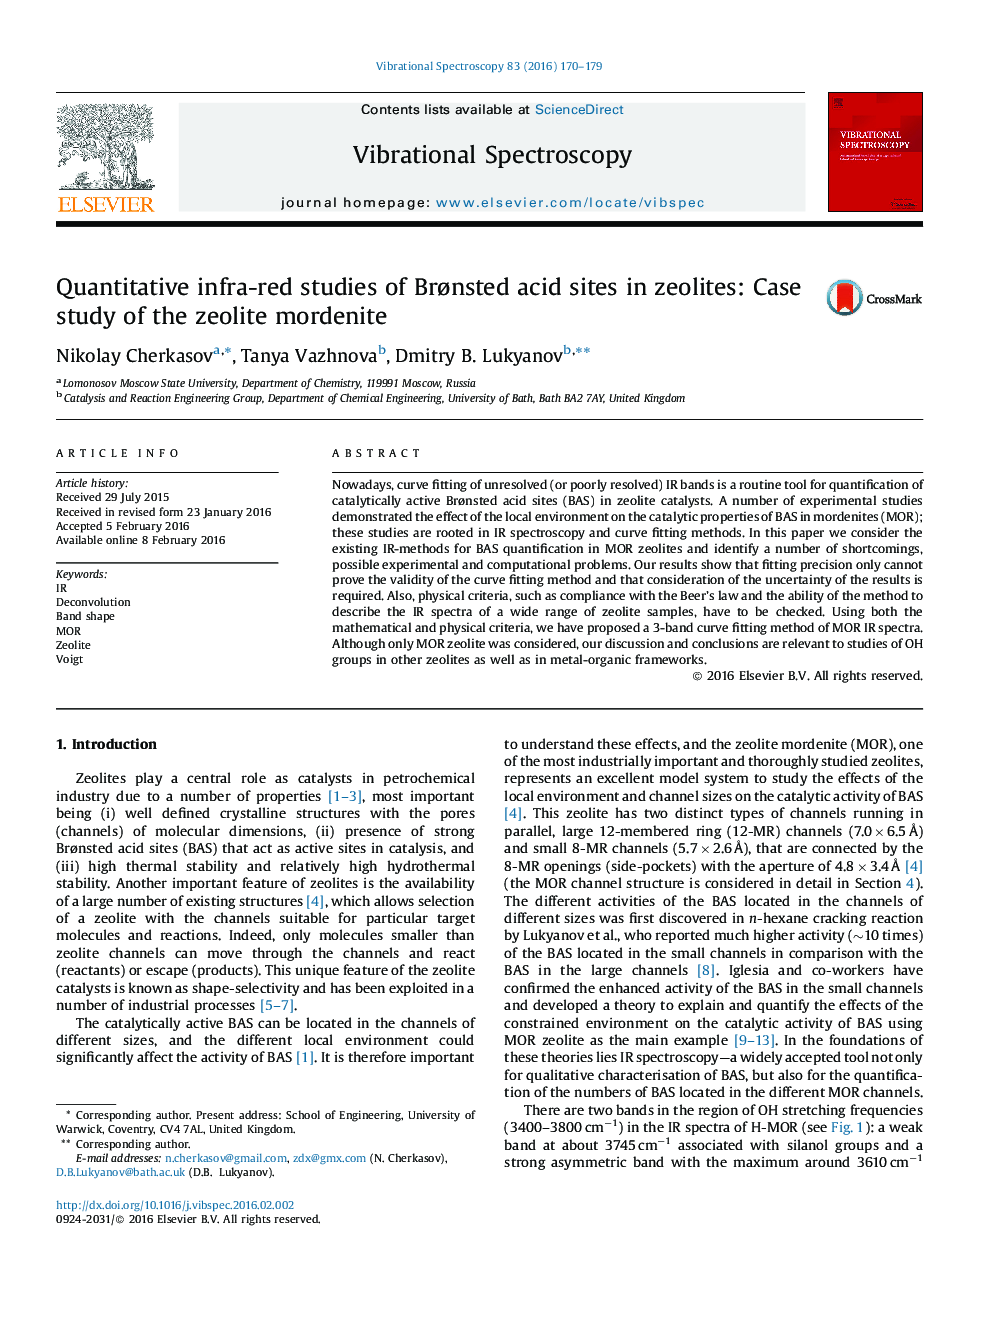 Quantitative infra-red studies of Brønsted acid sites in zeolites: Case study of the zeolite mordenite